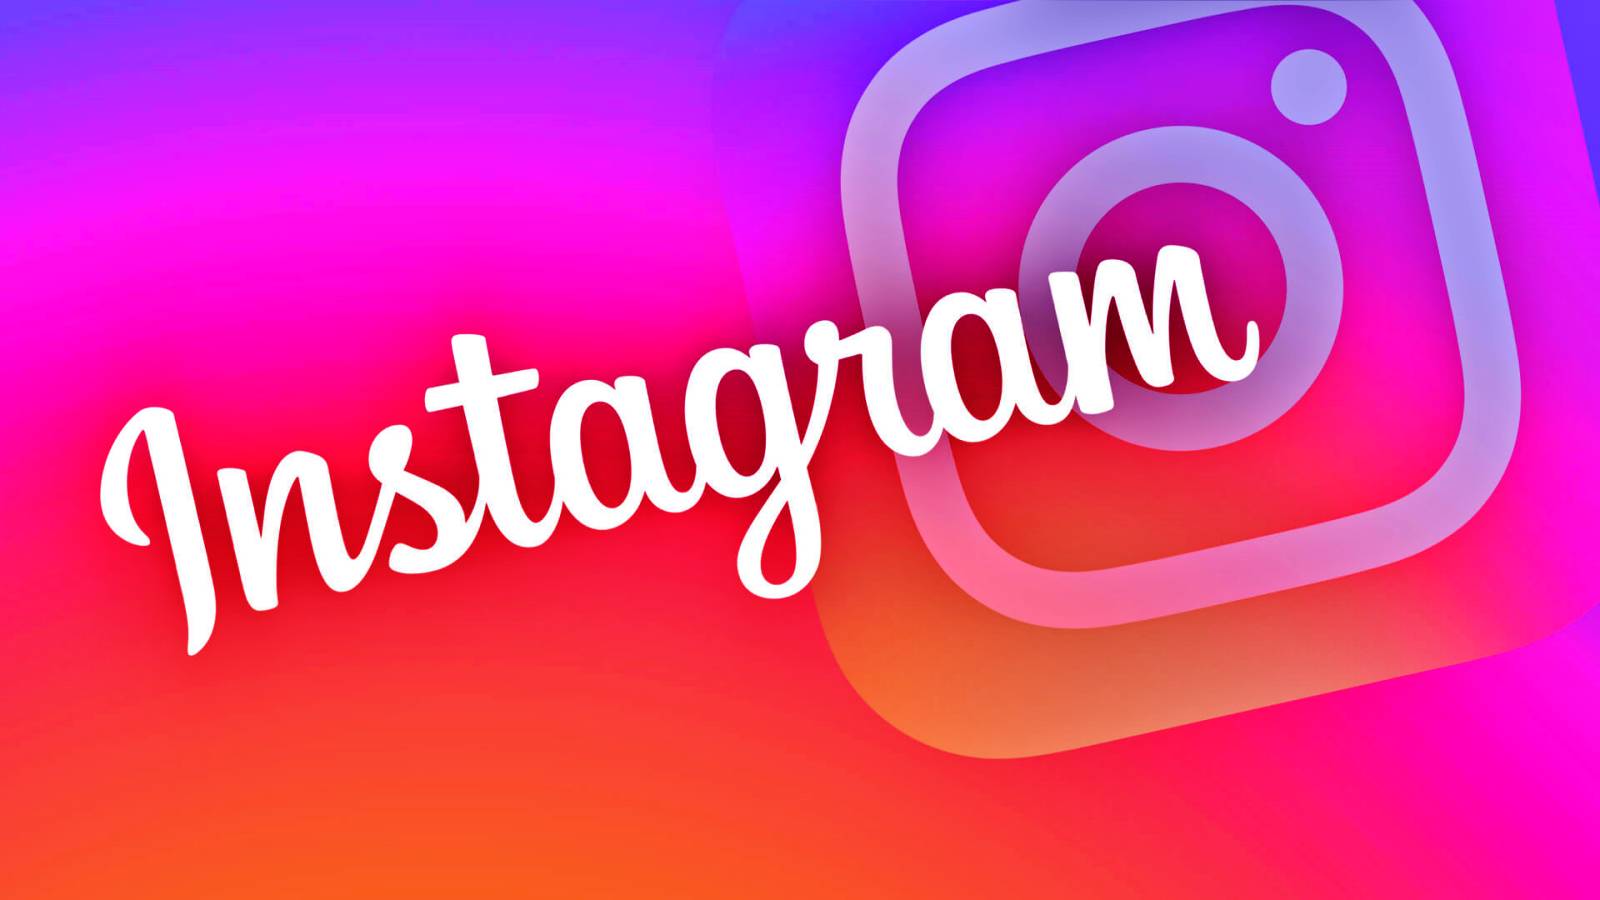 Instagram Update Lansat Noutatile Aduse Android iPhone